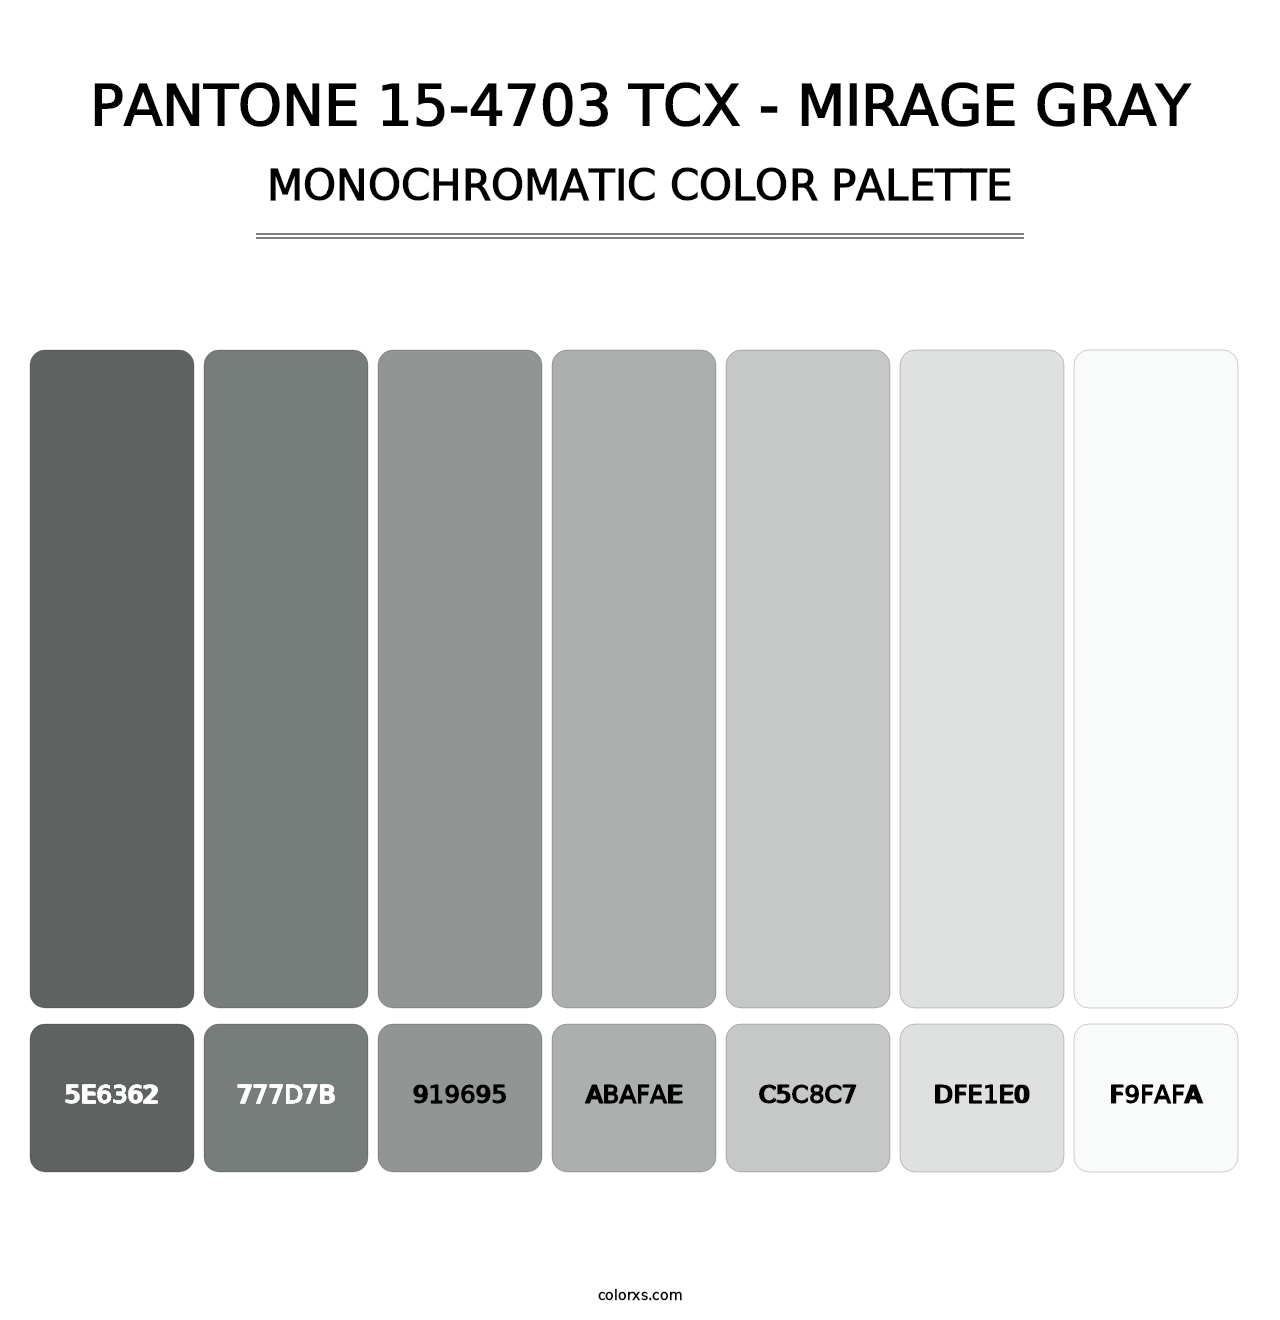 PANTONE 15-4703 TCX - Mirage Gray - Monochromatic Color Palette